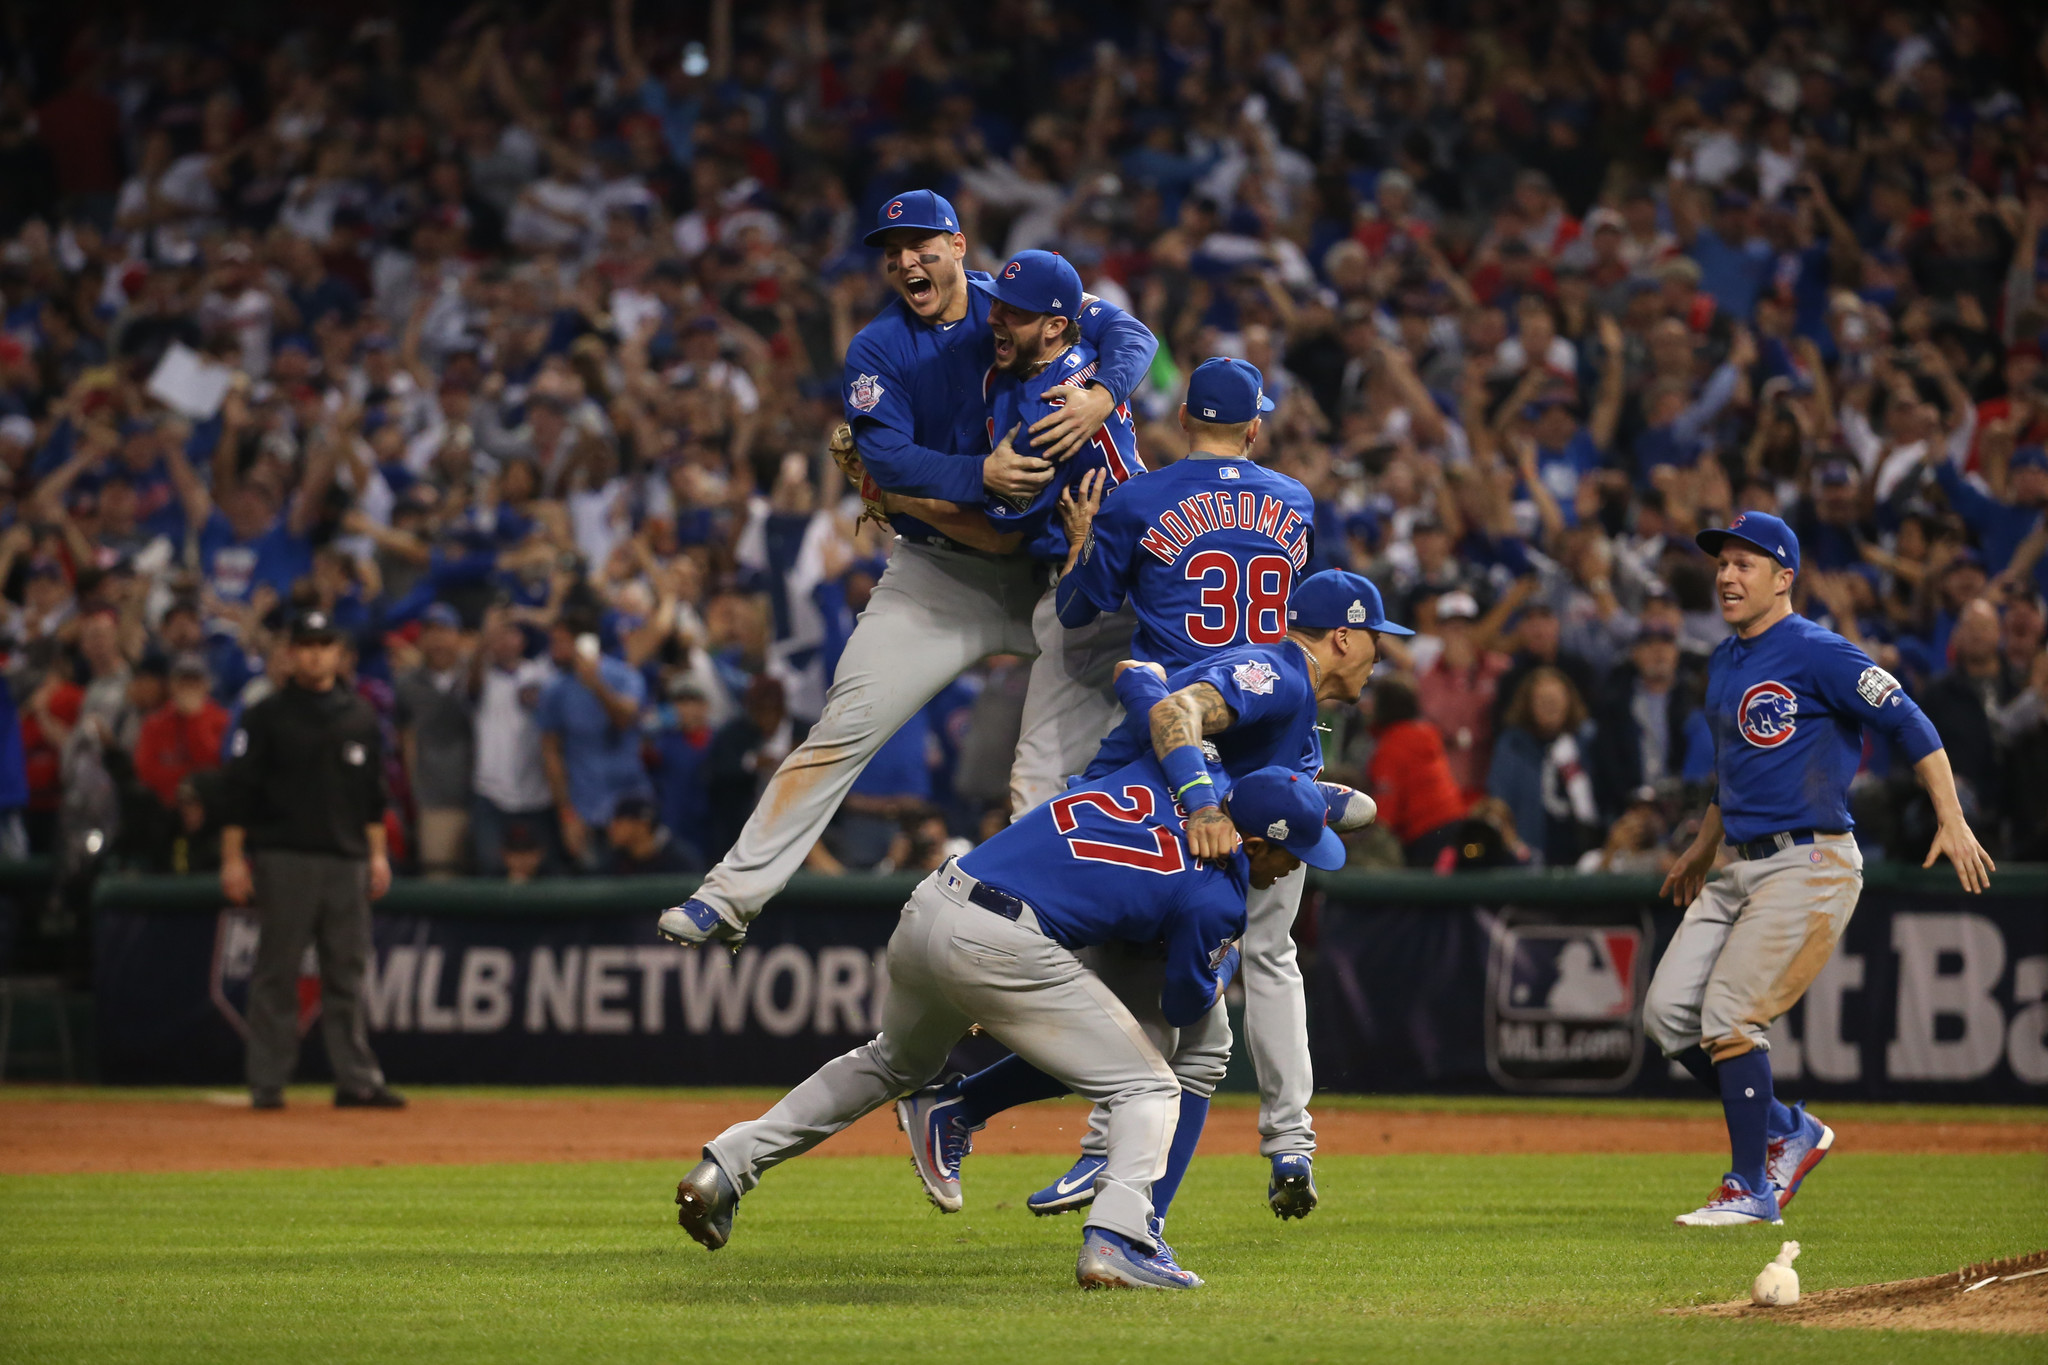 GF Baseball — The Cubs have won the World Series - November 2